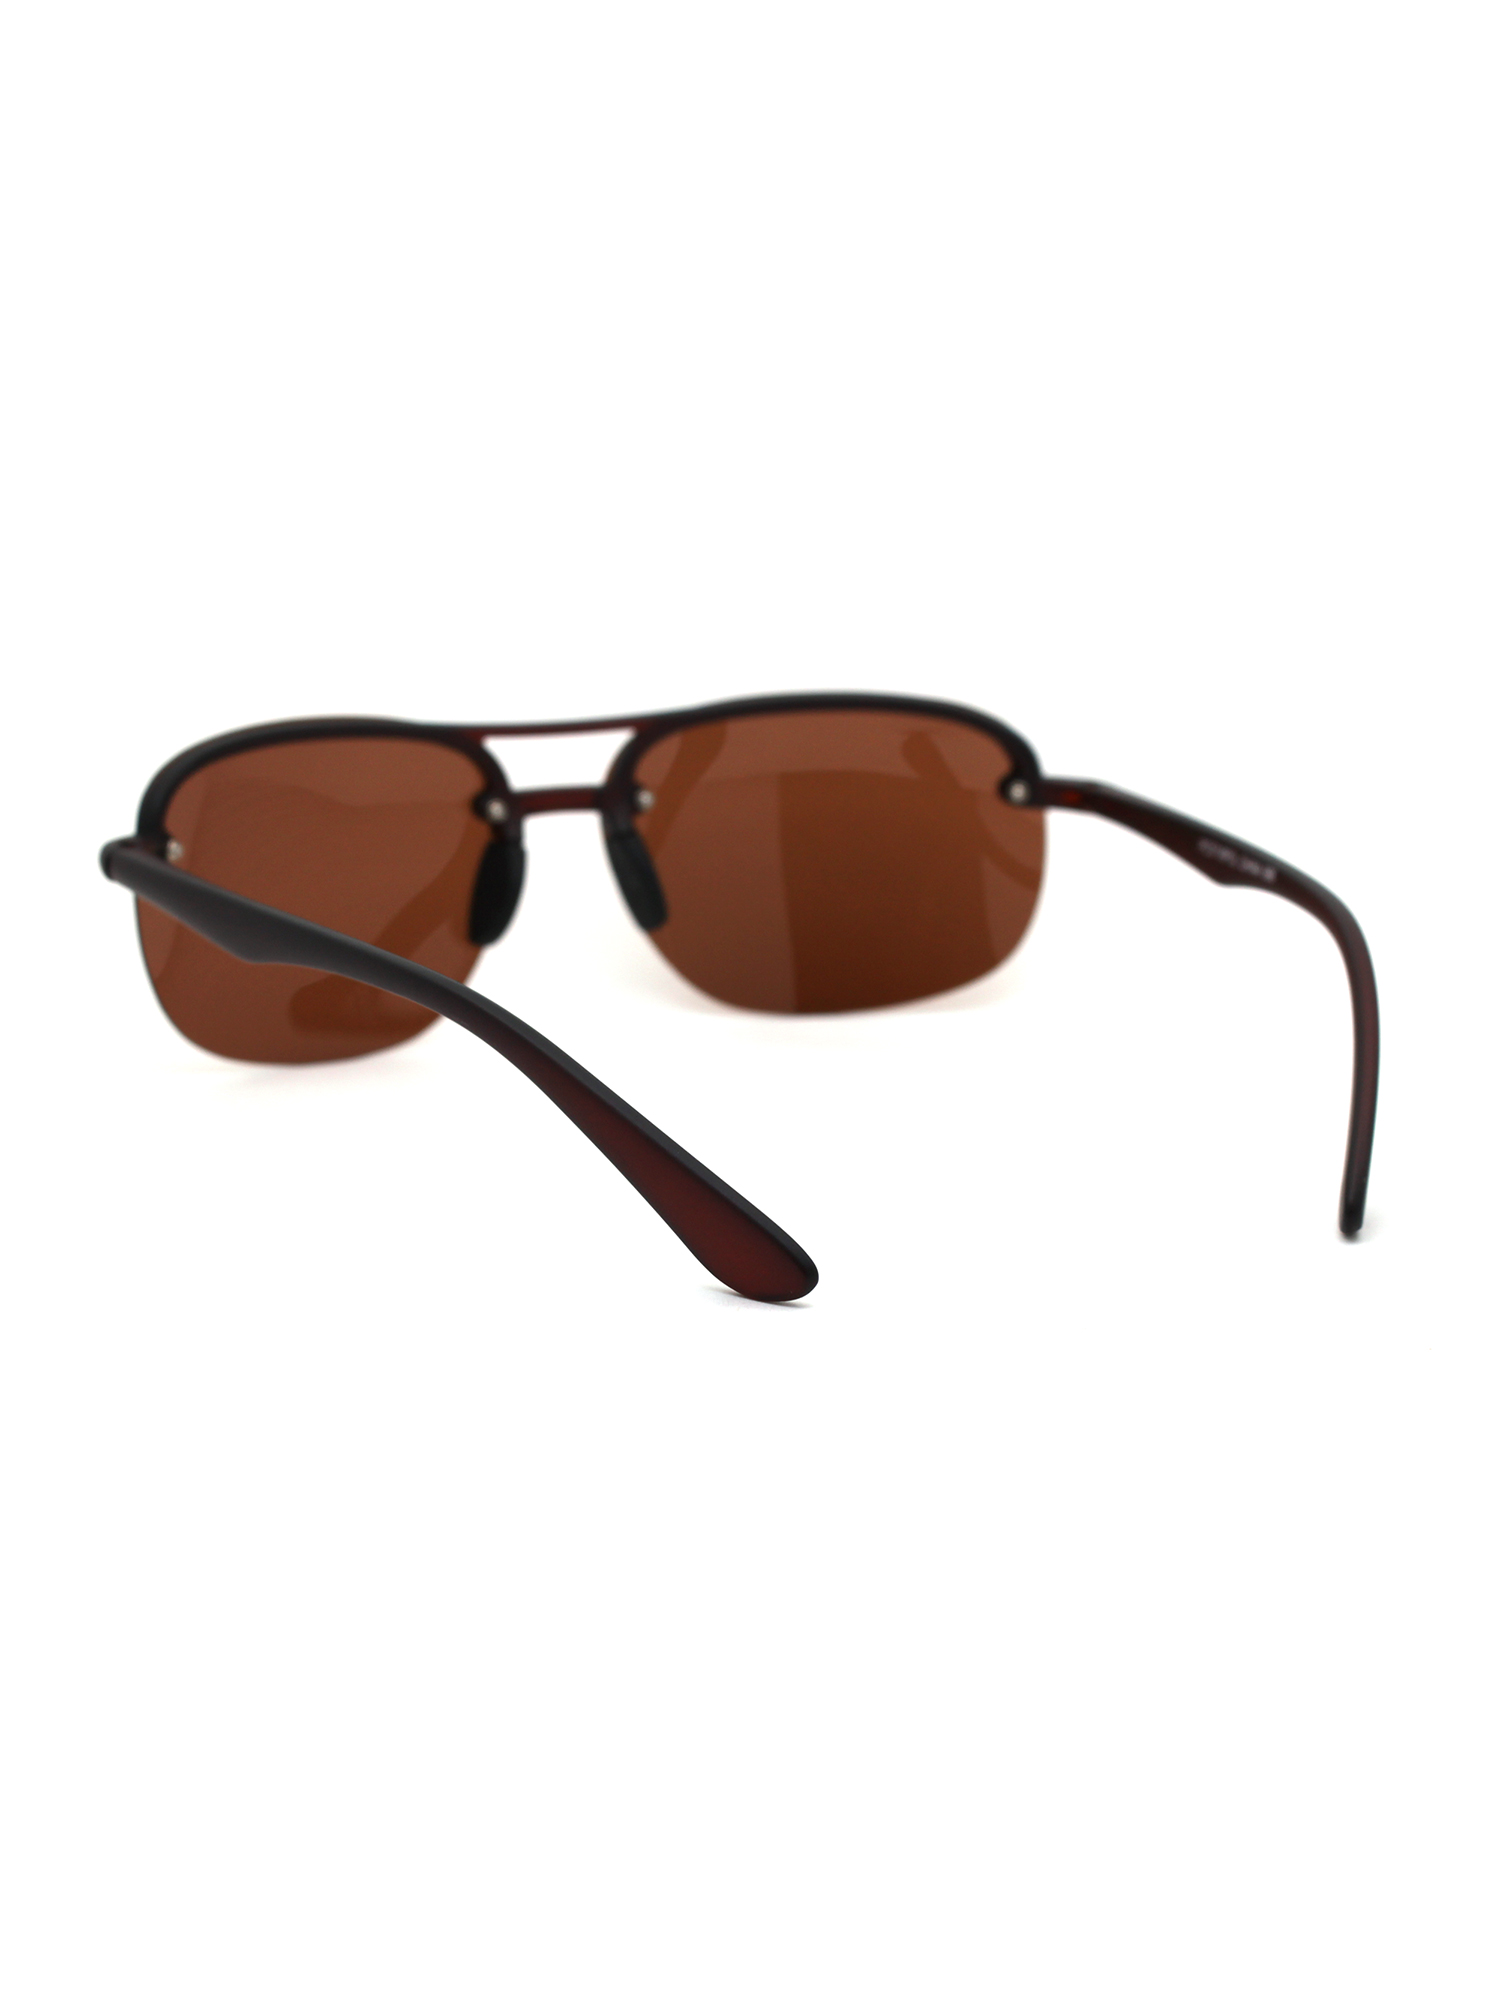 Polarized Mens Classic 90s Half Rim Rimless Style Racer Sunglasses Matte Brown - image 4 of 4